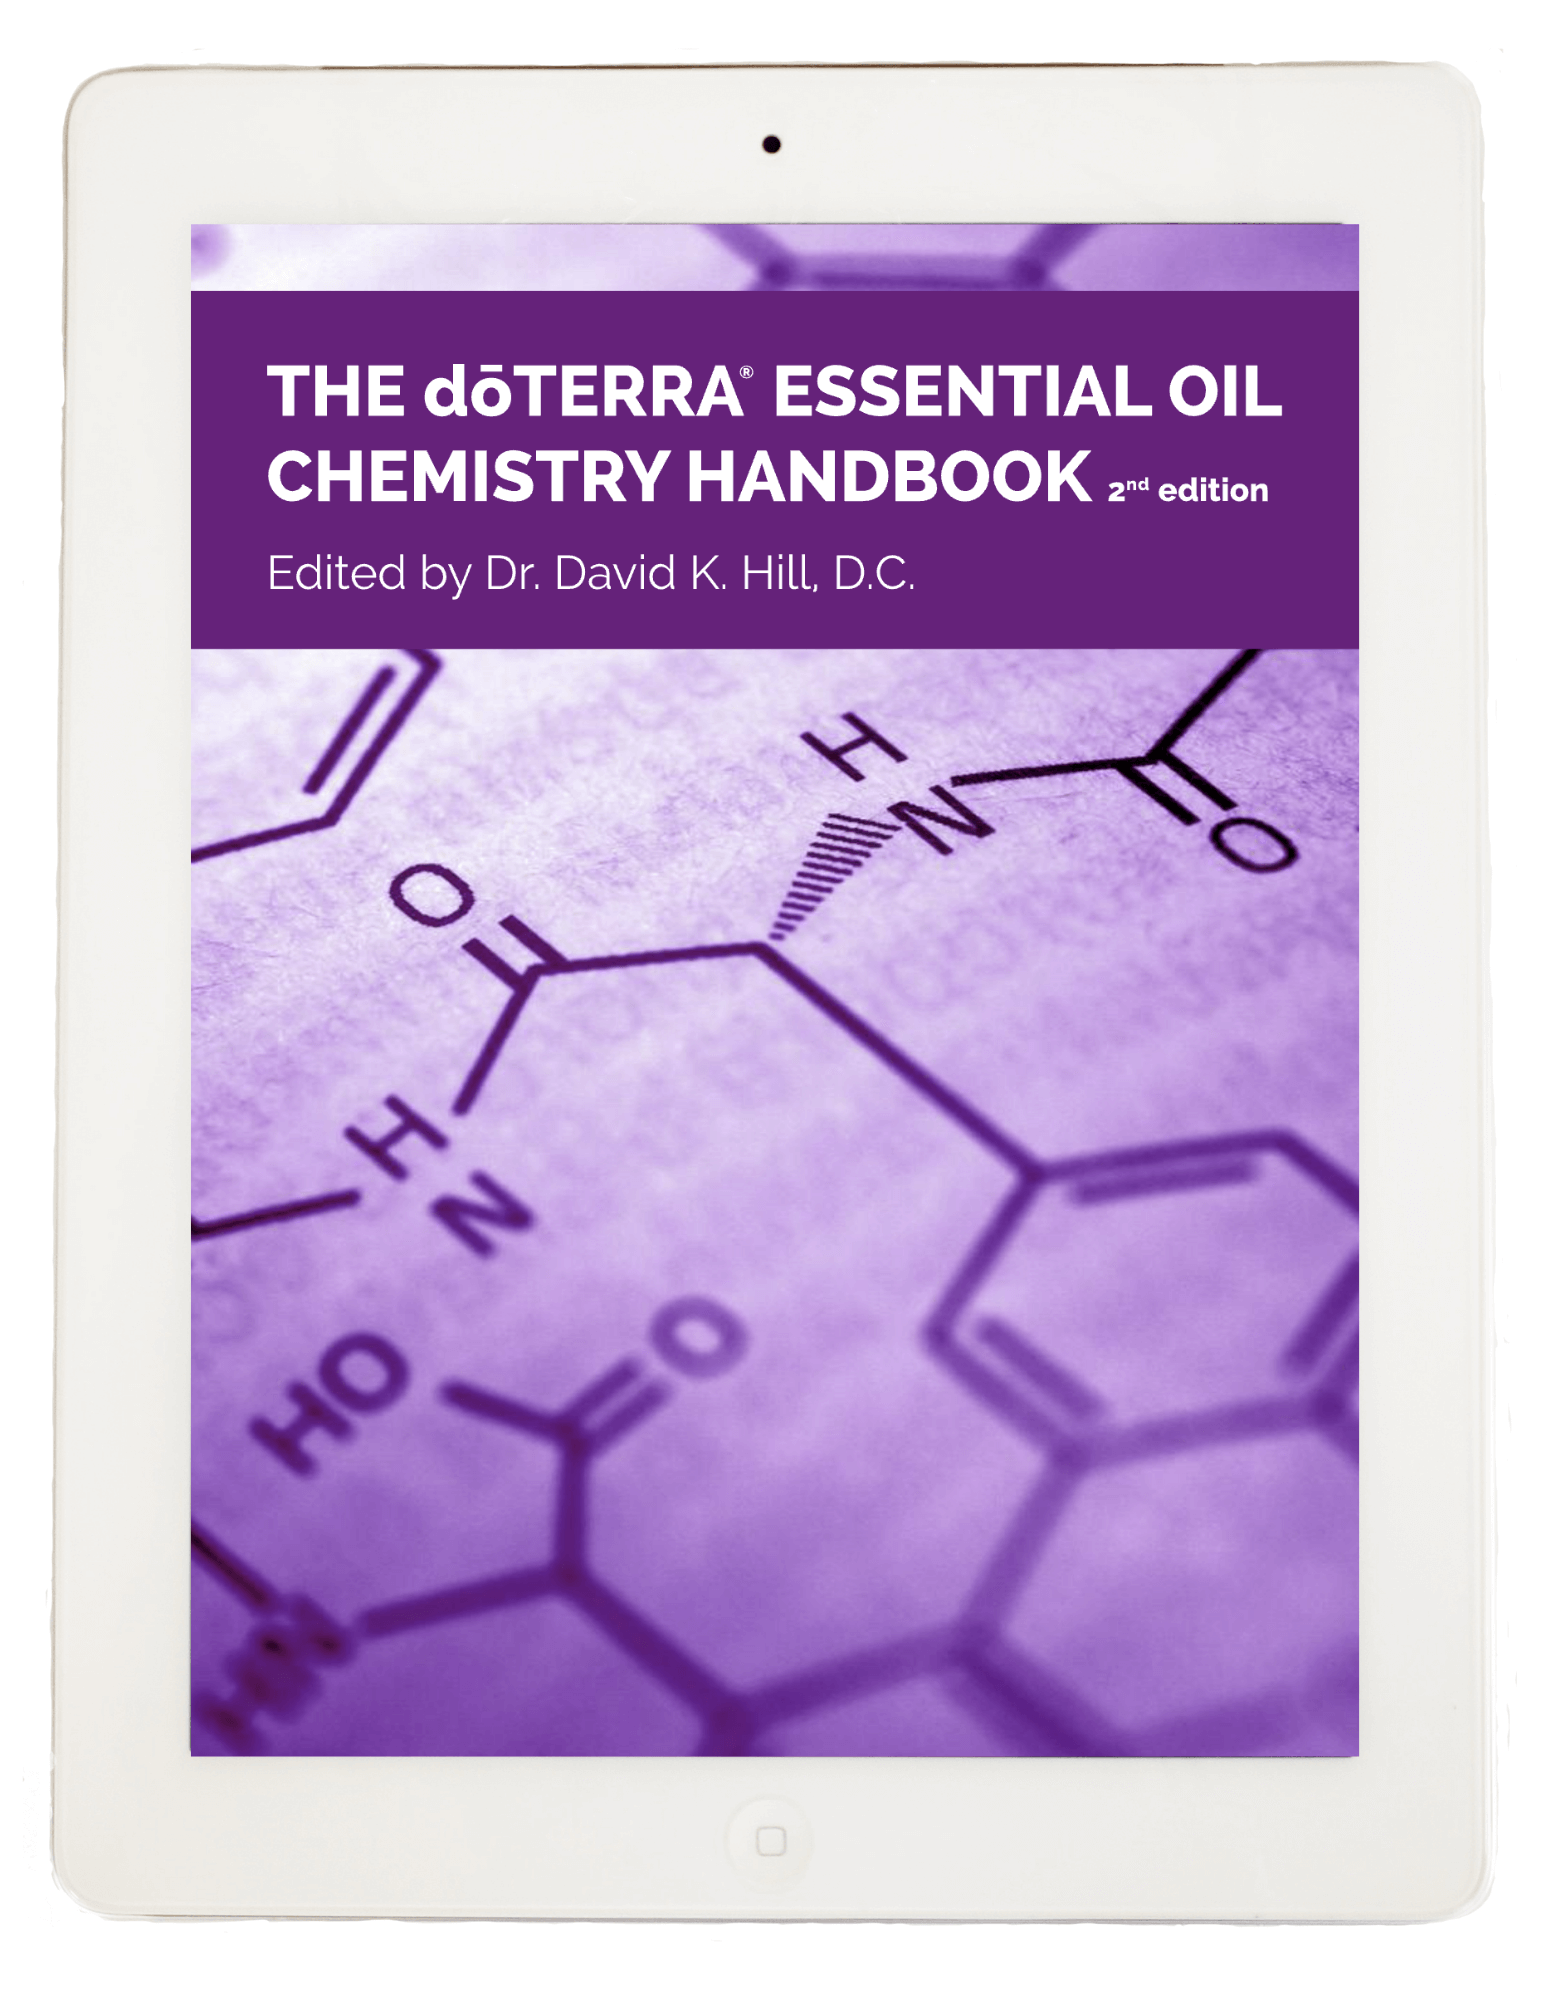 Free doTERRA Essential Oil Chemistry Handbook